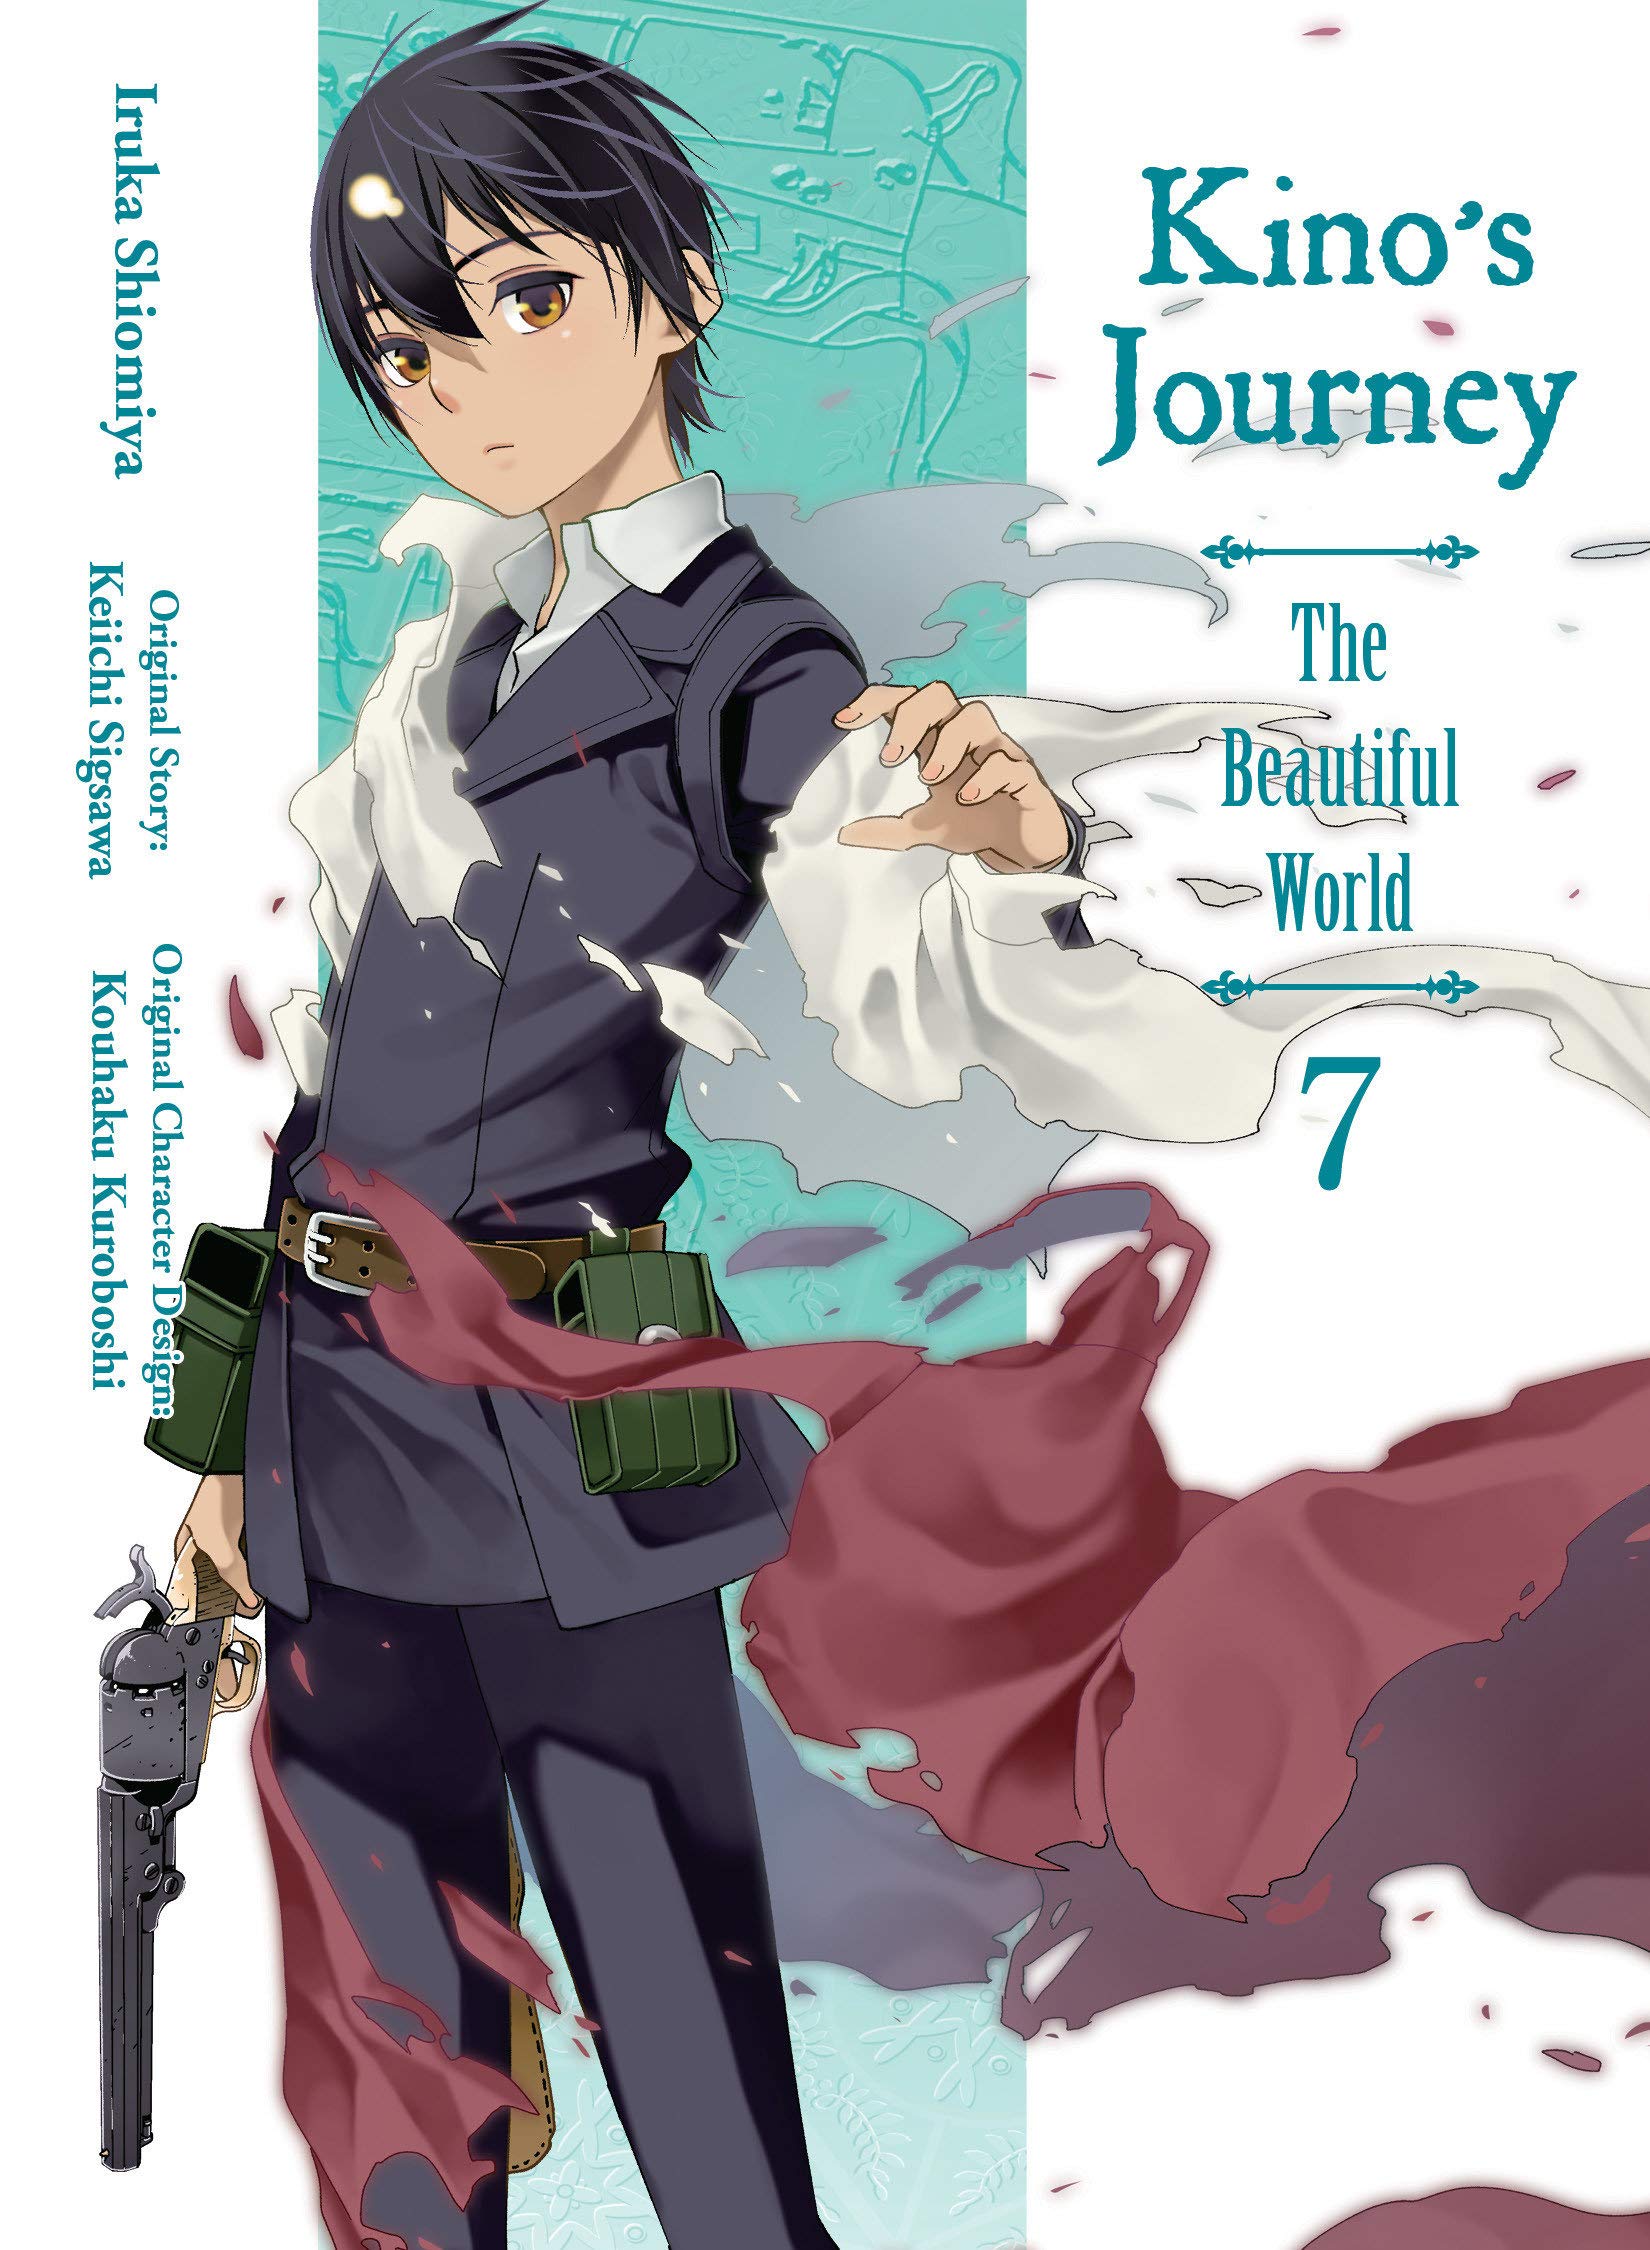 kino's journey Archives - Anime Herald